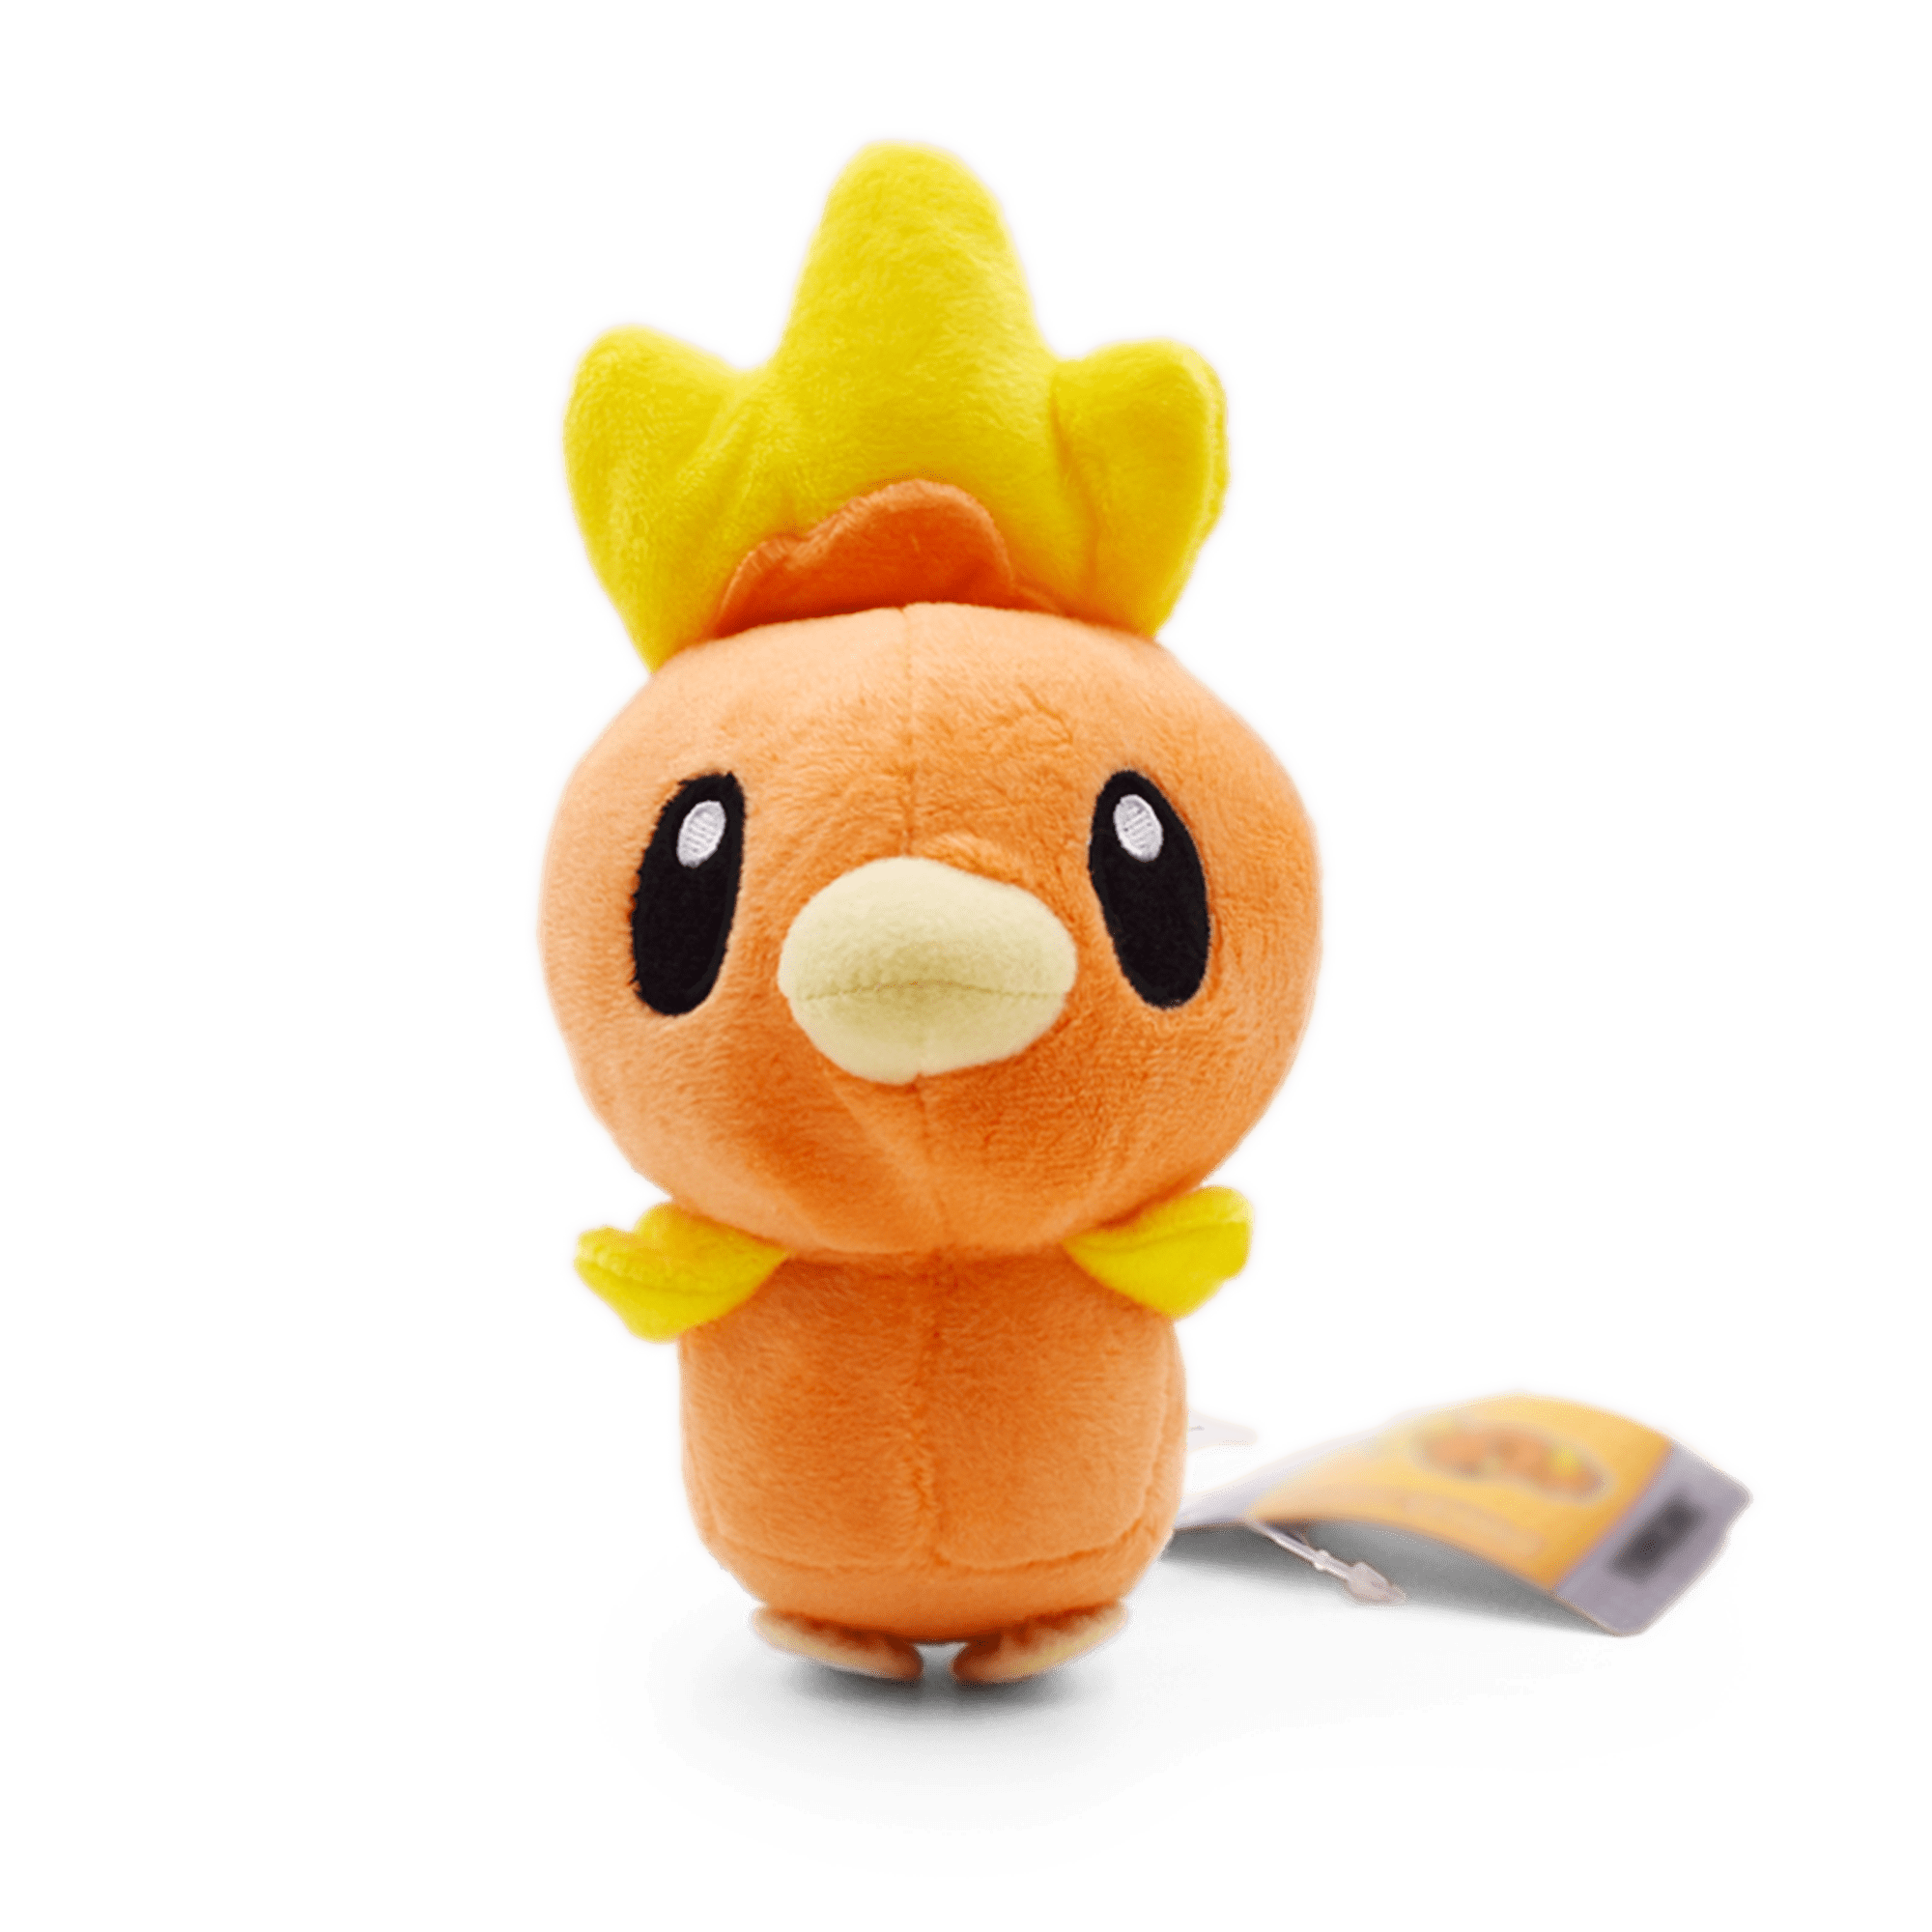 Torchic Hoenn Pokemon Plush Fire Type Chick Soft Toy Stuffed Animal 7" 